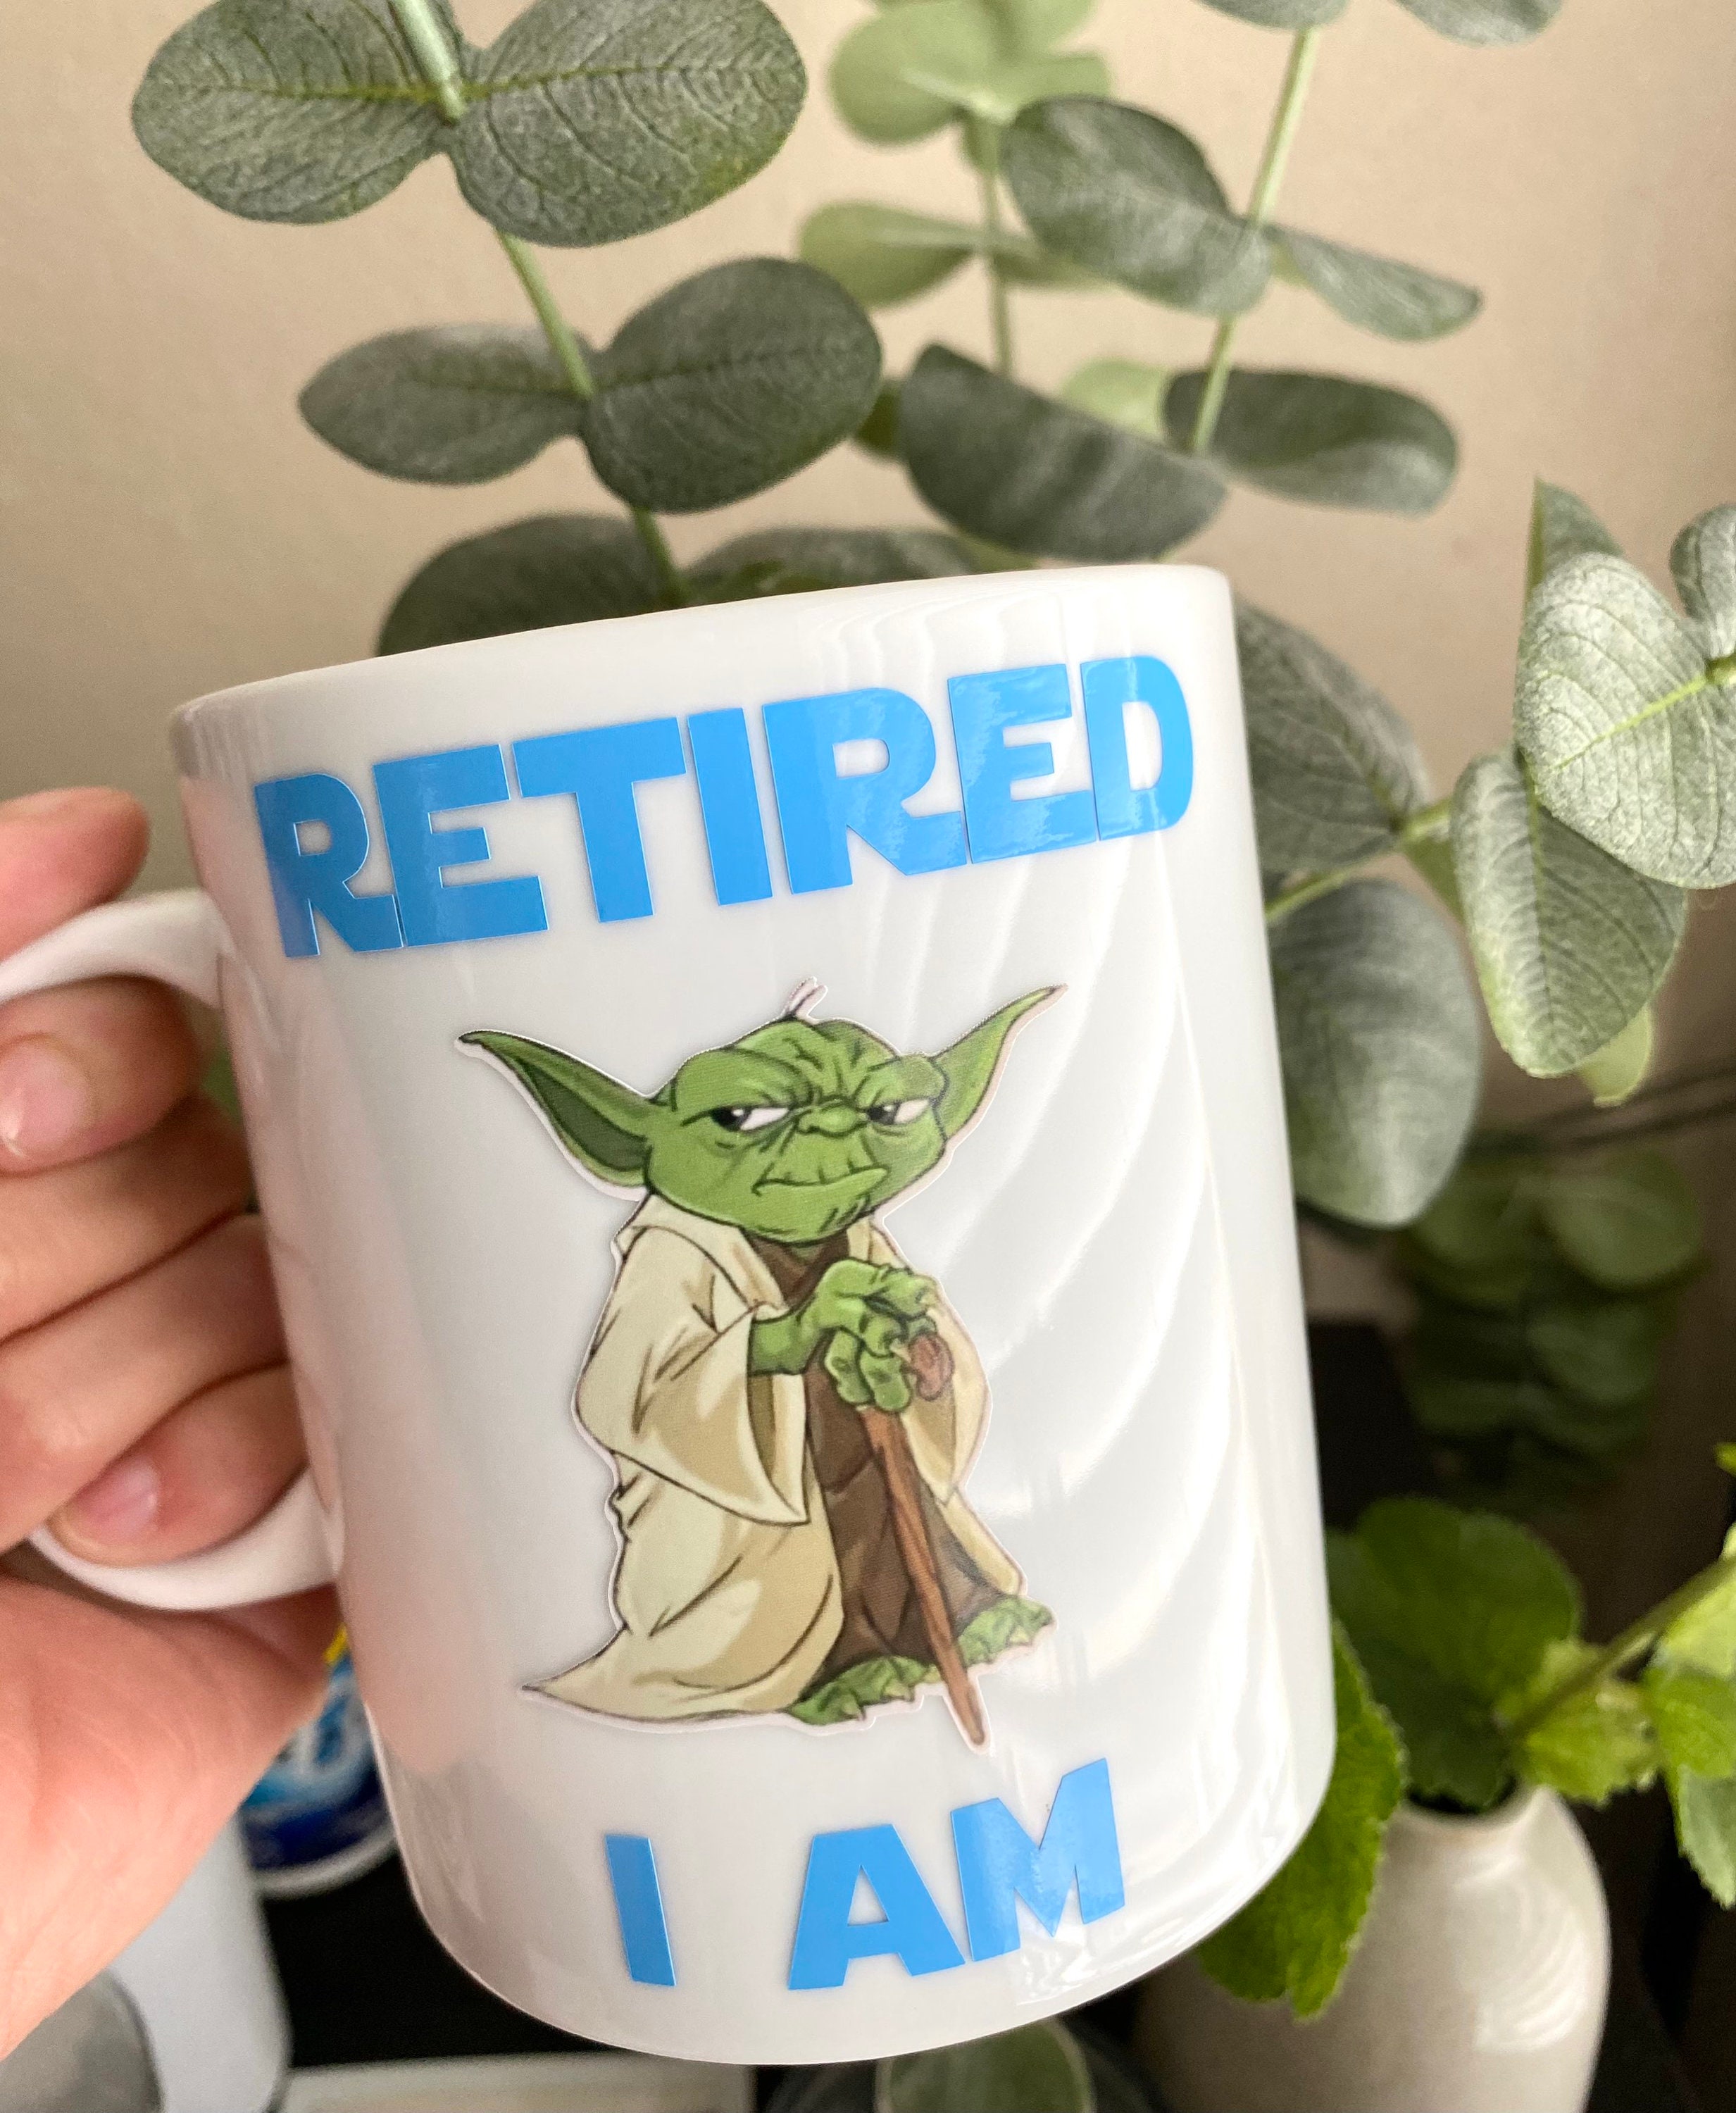 Yoda Best Co-worker - Gift for Co-worker, Funny Yoda Mug, Cu